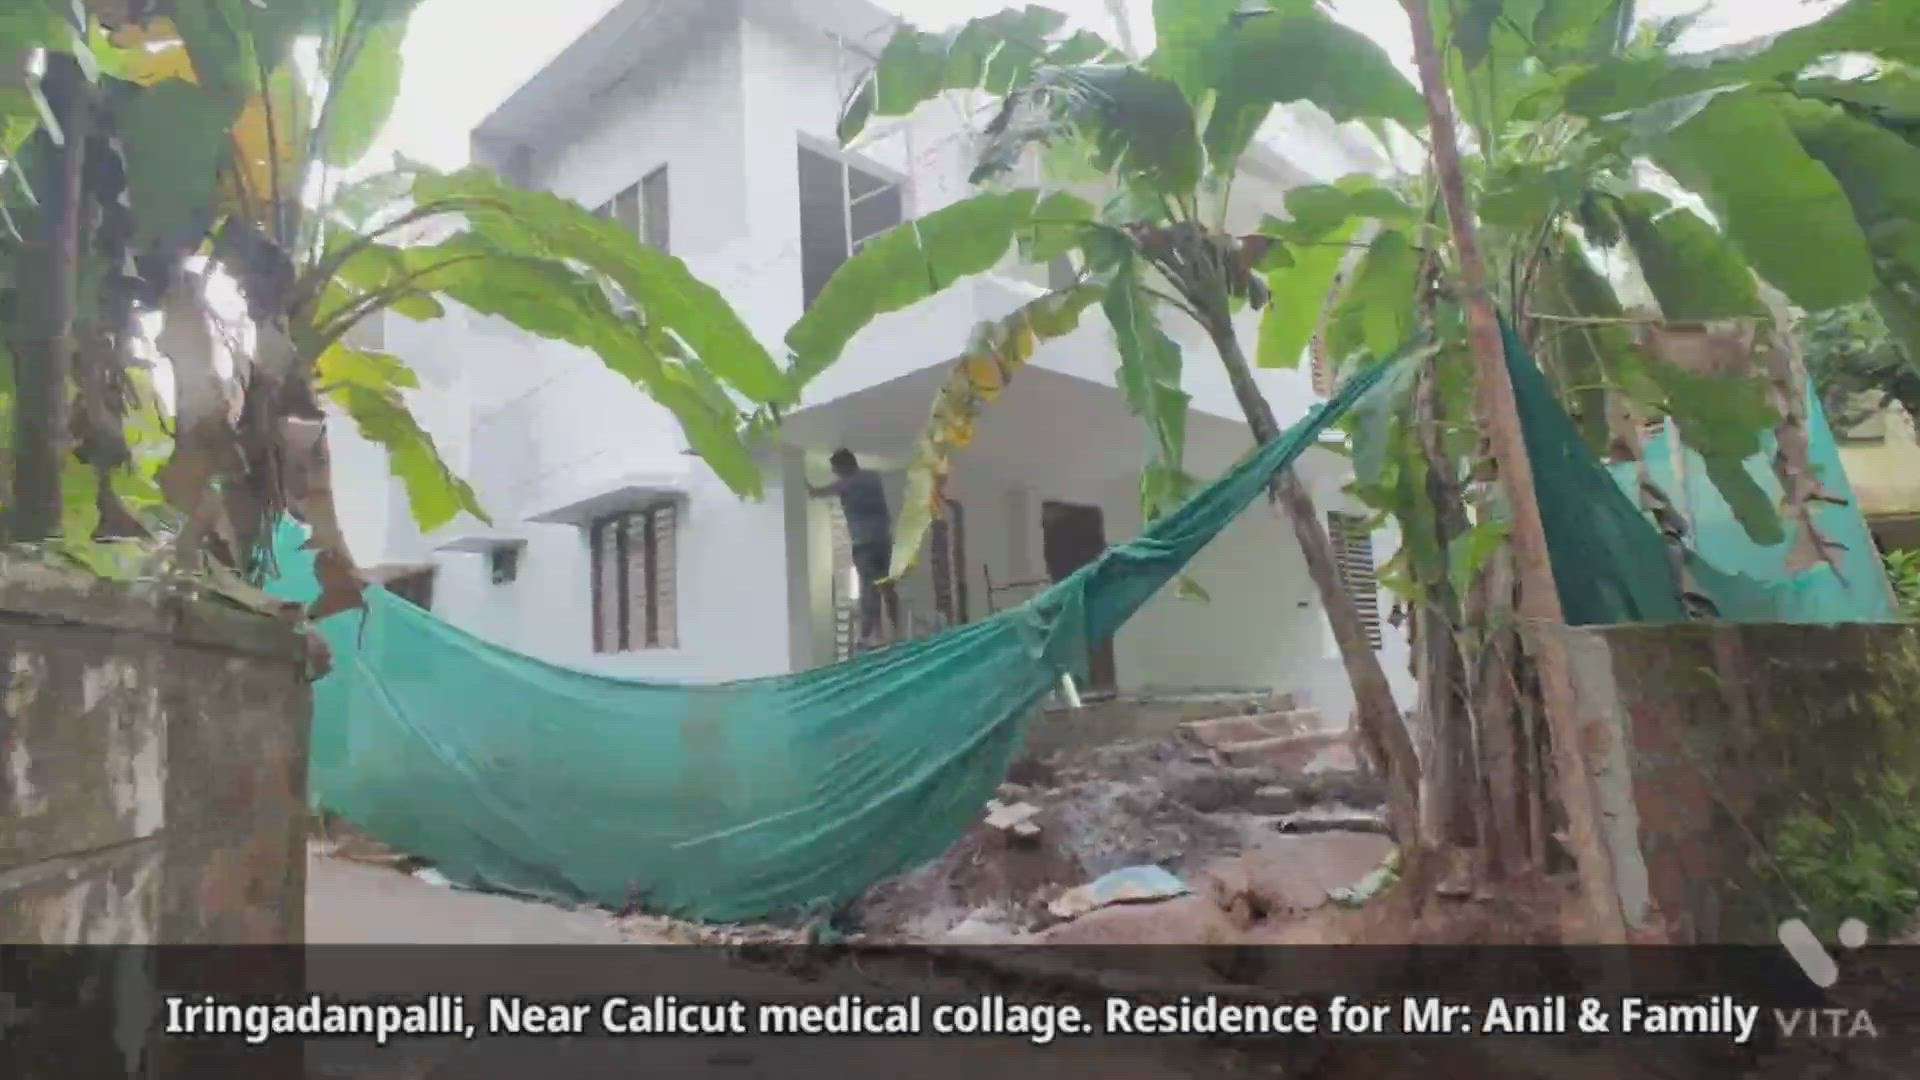 Residence at Iringadanpalli, near Calicut Medical college.
for Mr: Anil & Family